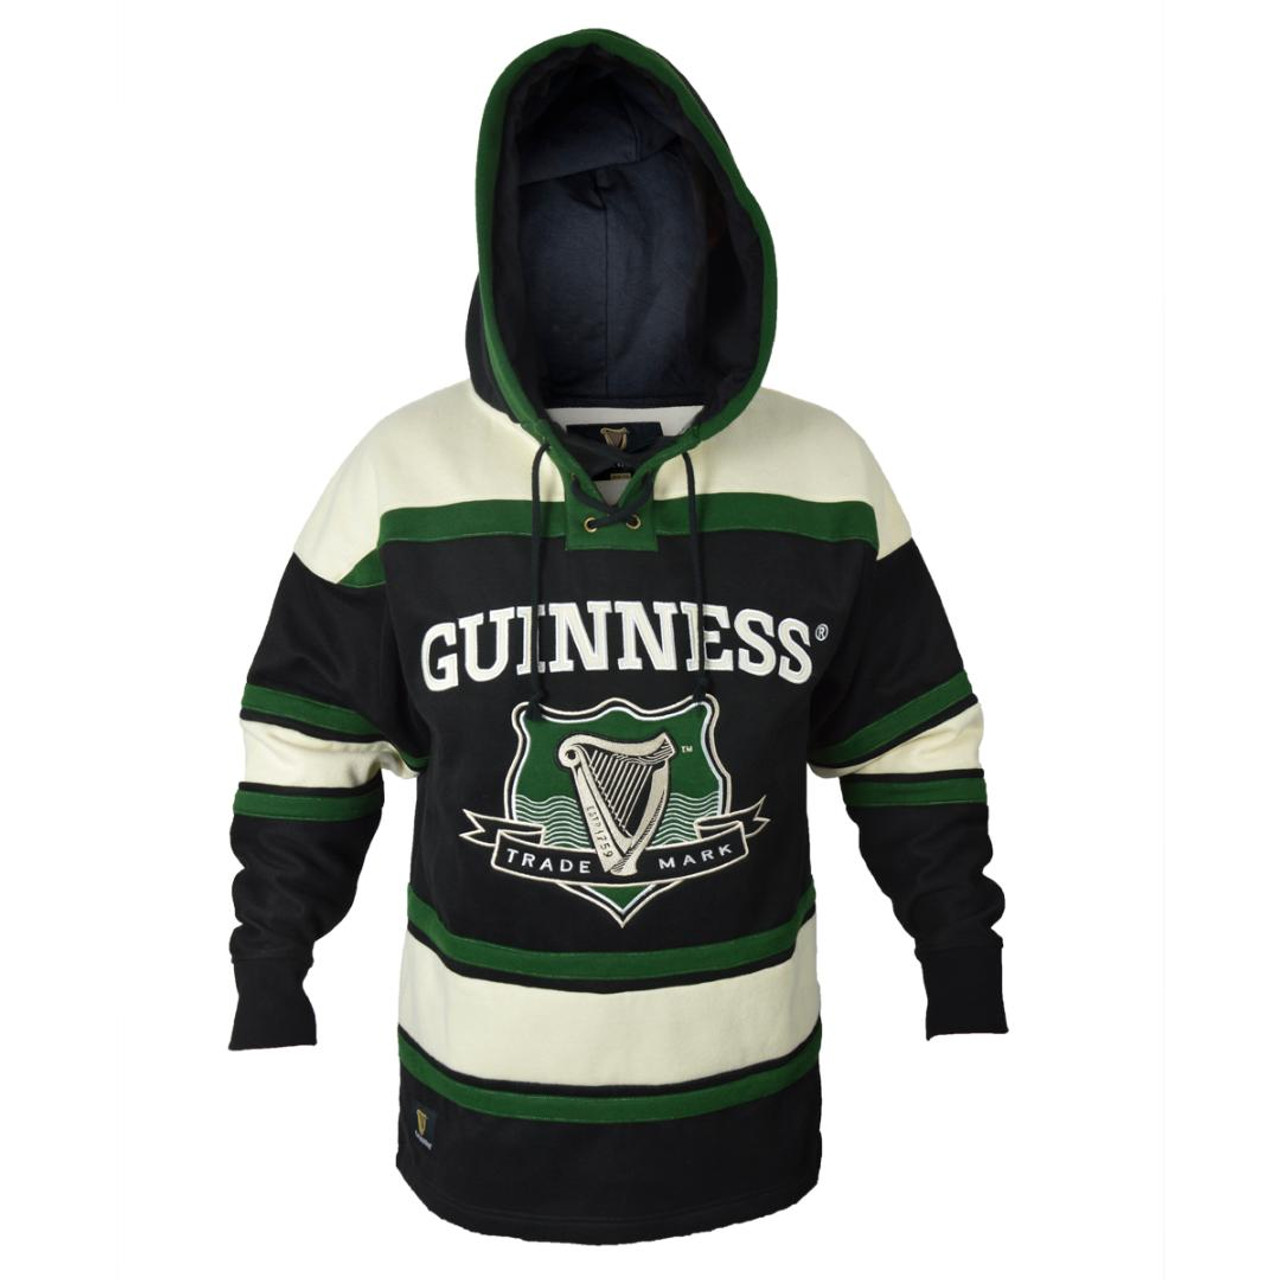 Guinness Toucan Hockey Jersey